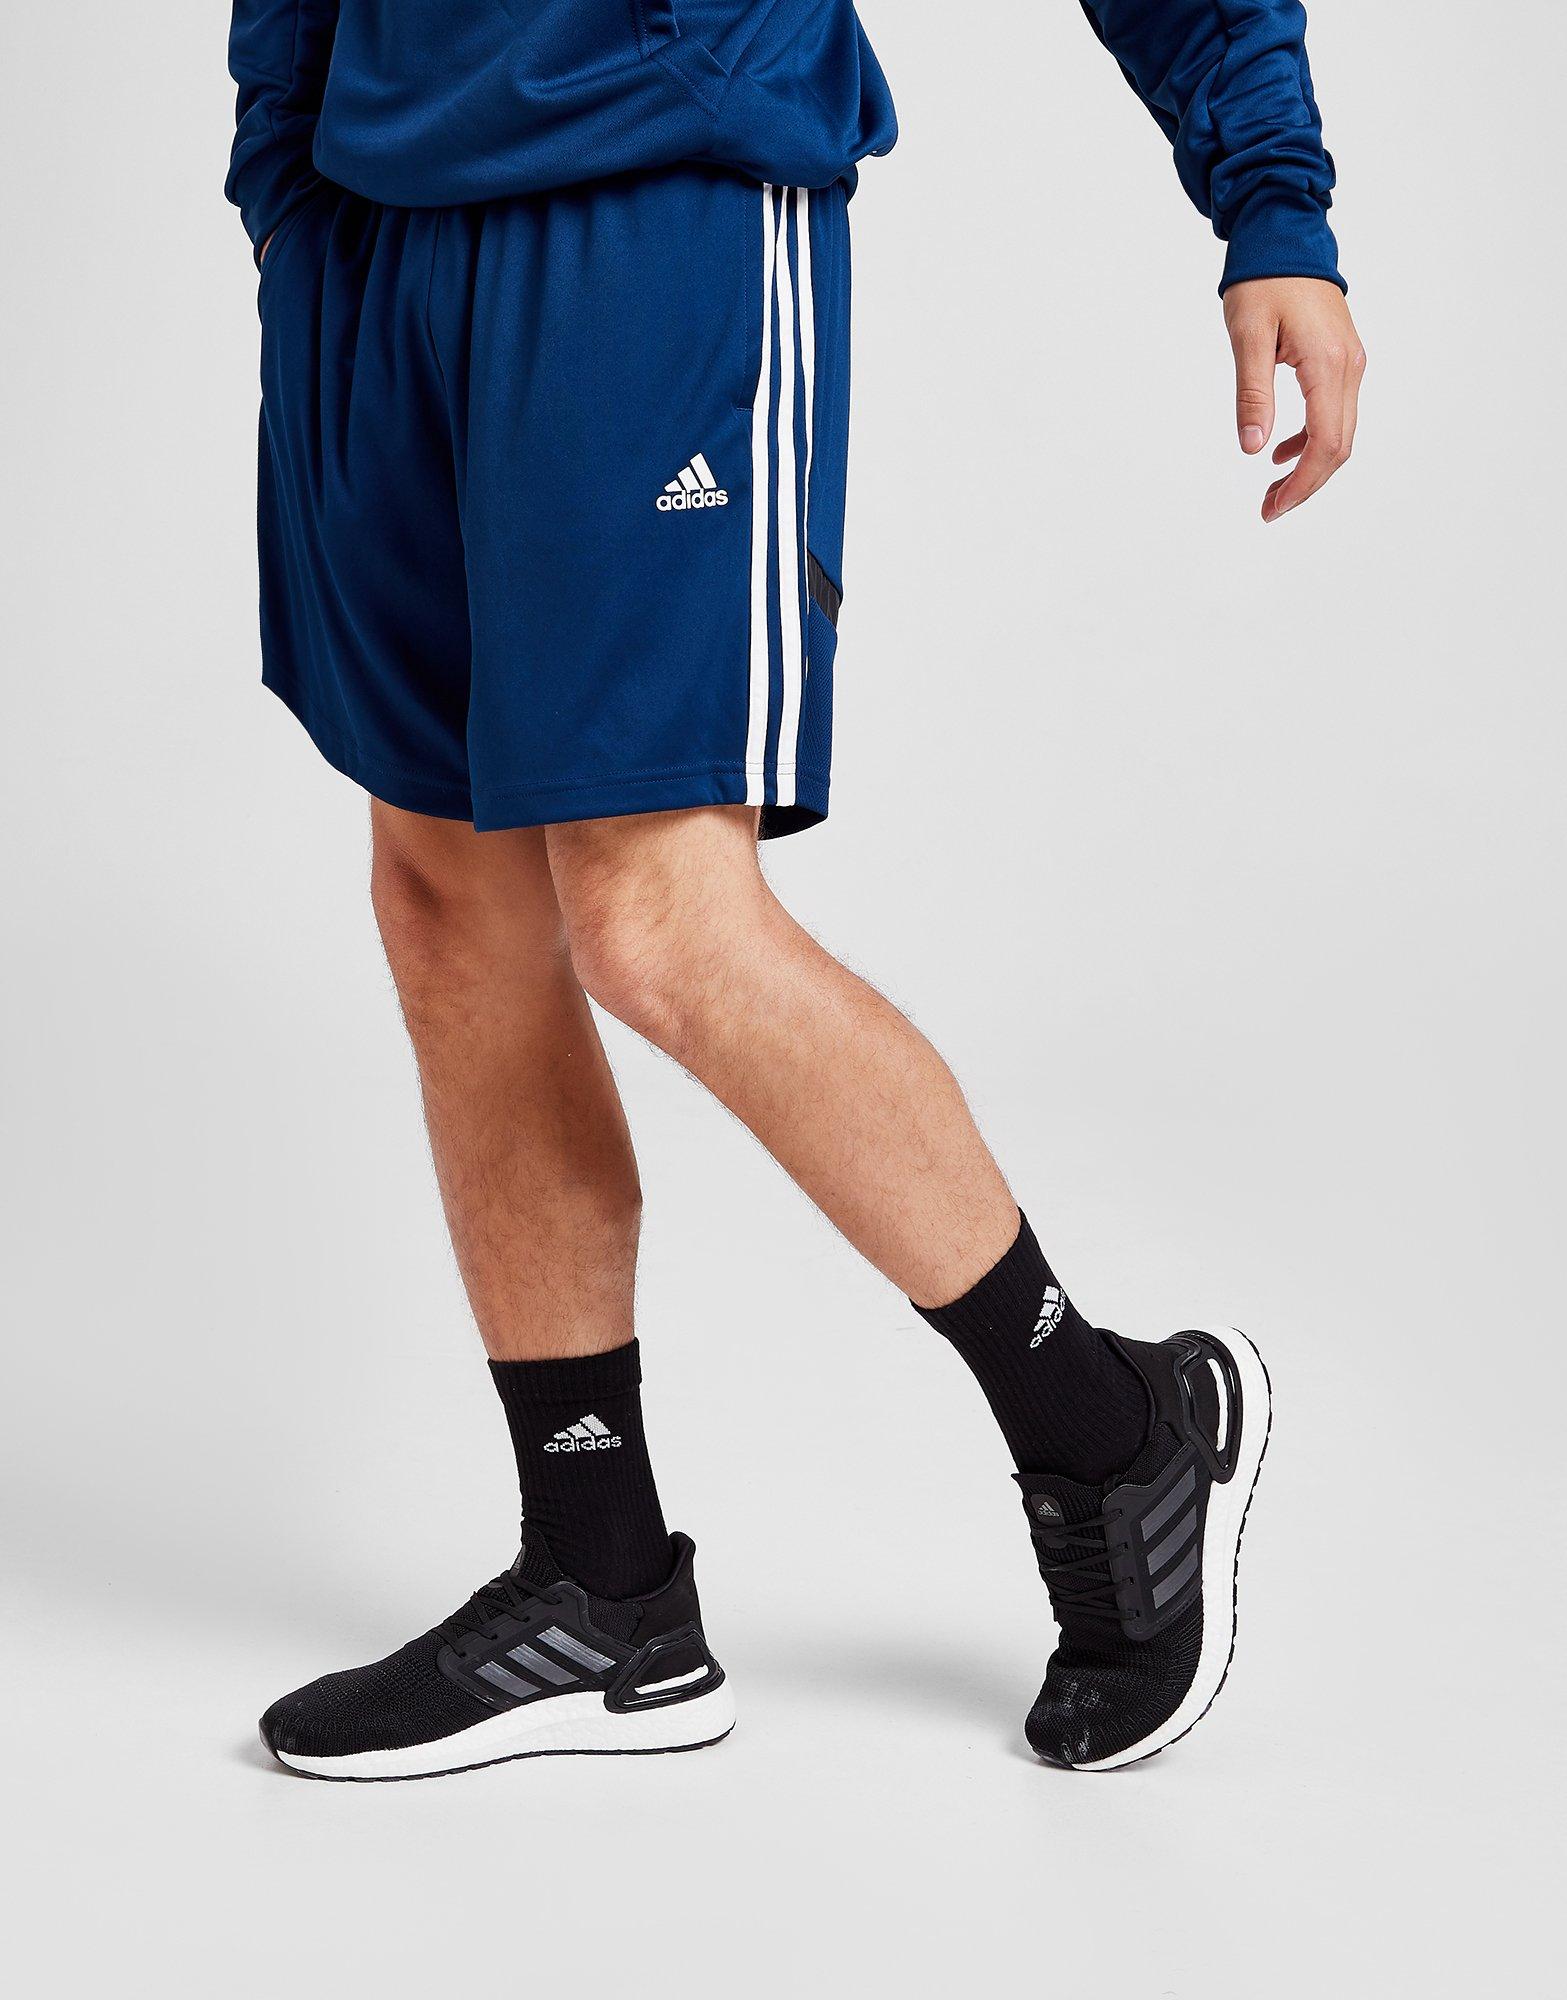 adidas match shorts